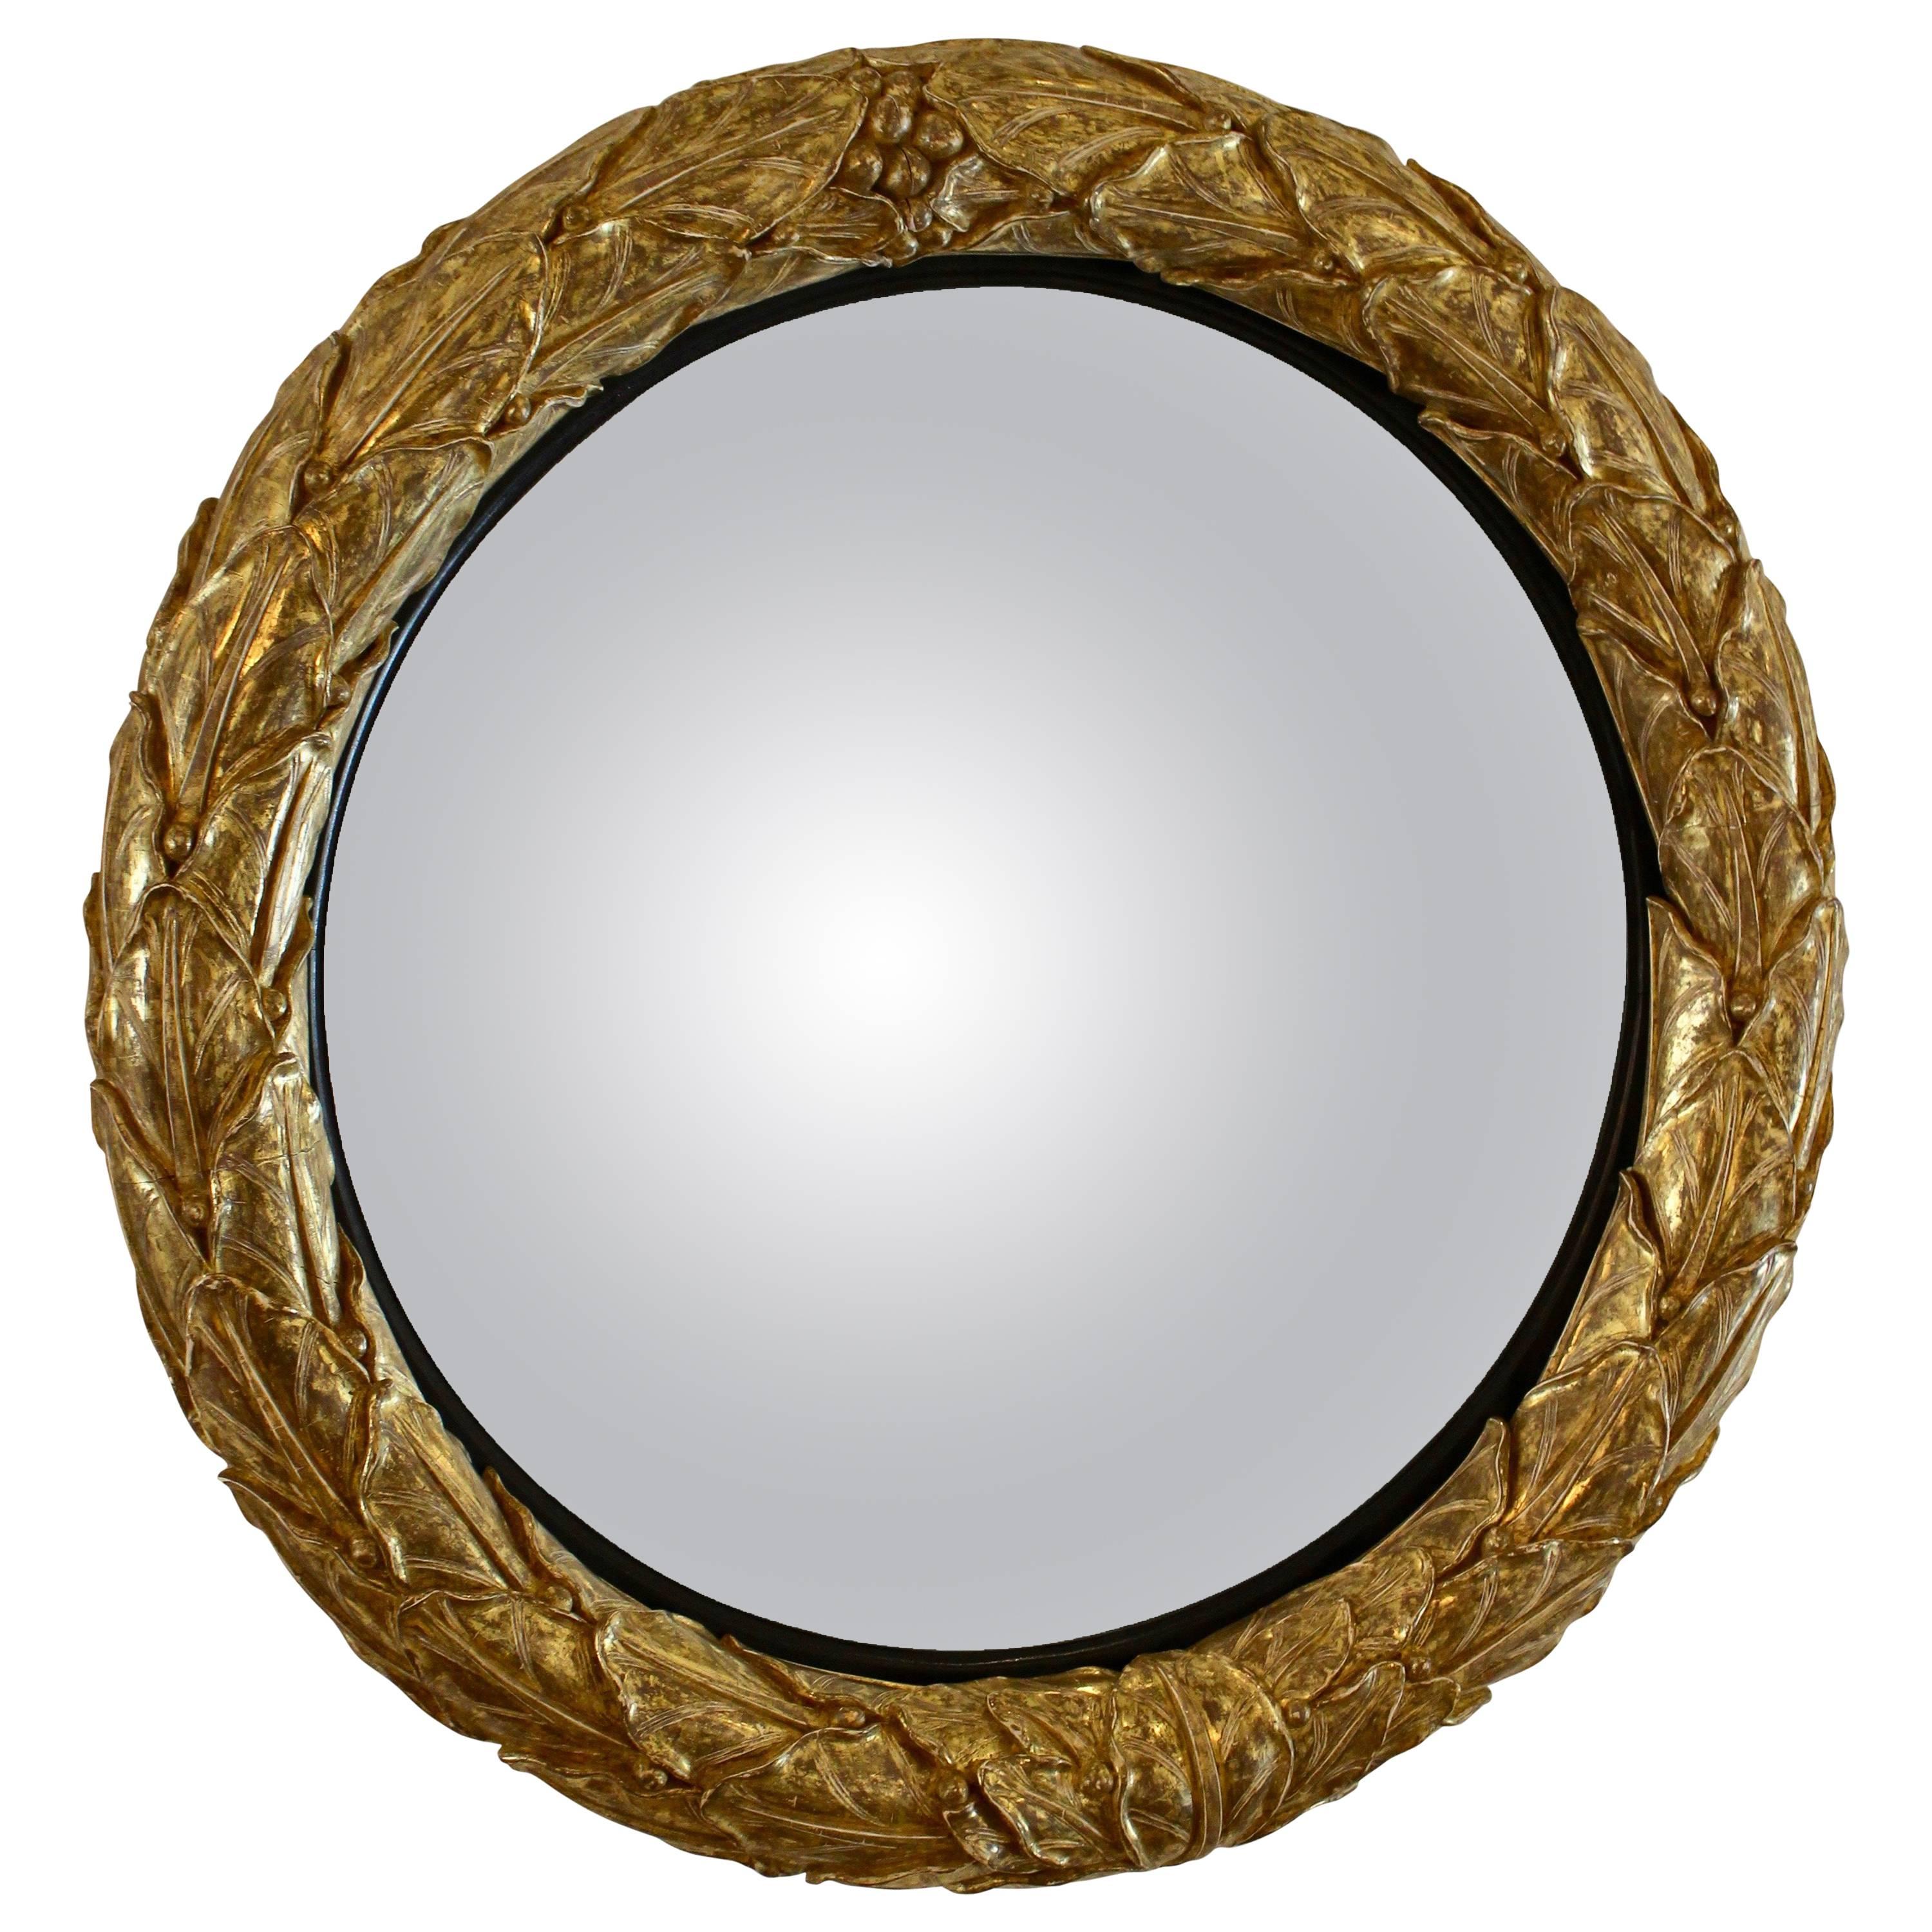 Impressive Regency Giltwood Convex Mirror with a Leaf Motif, Gilded For Sale